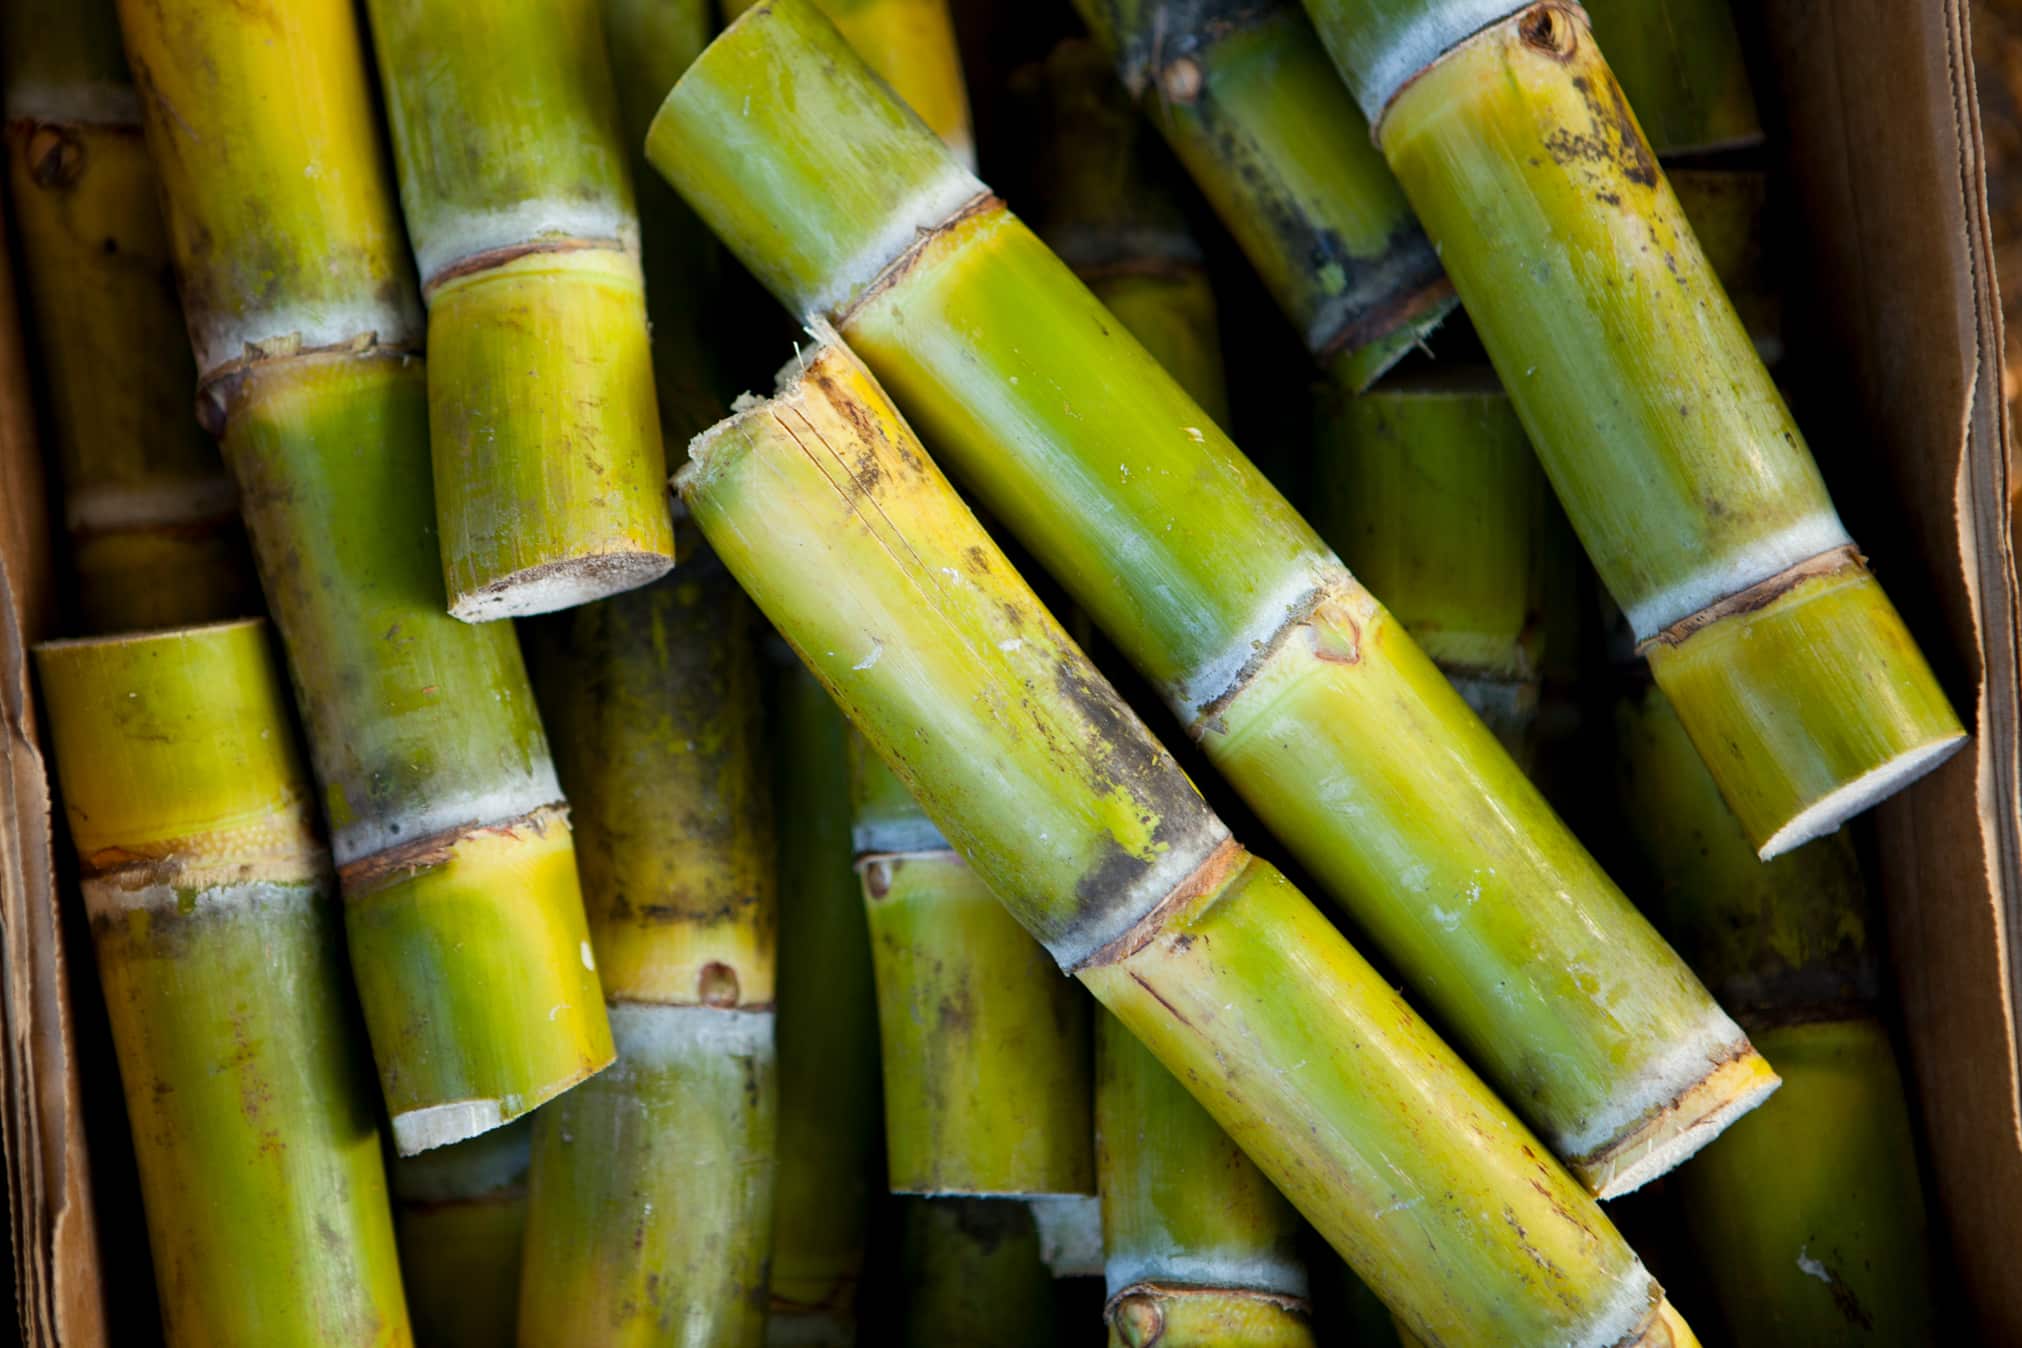 Sugarcane Pieces Credit: Hawaii Tourism Authority (HTA) / Dana Edmunds